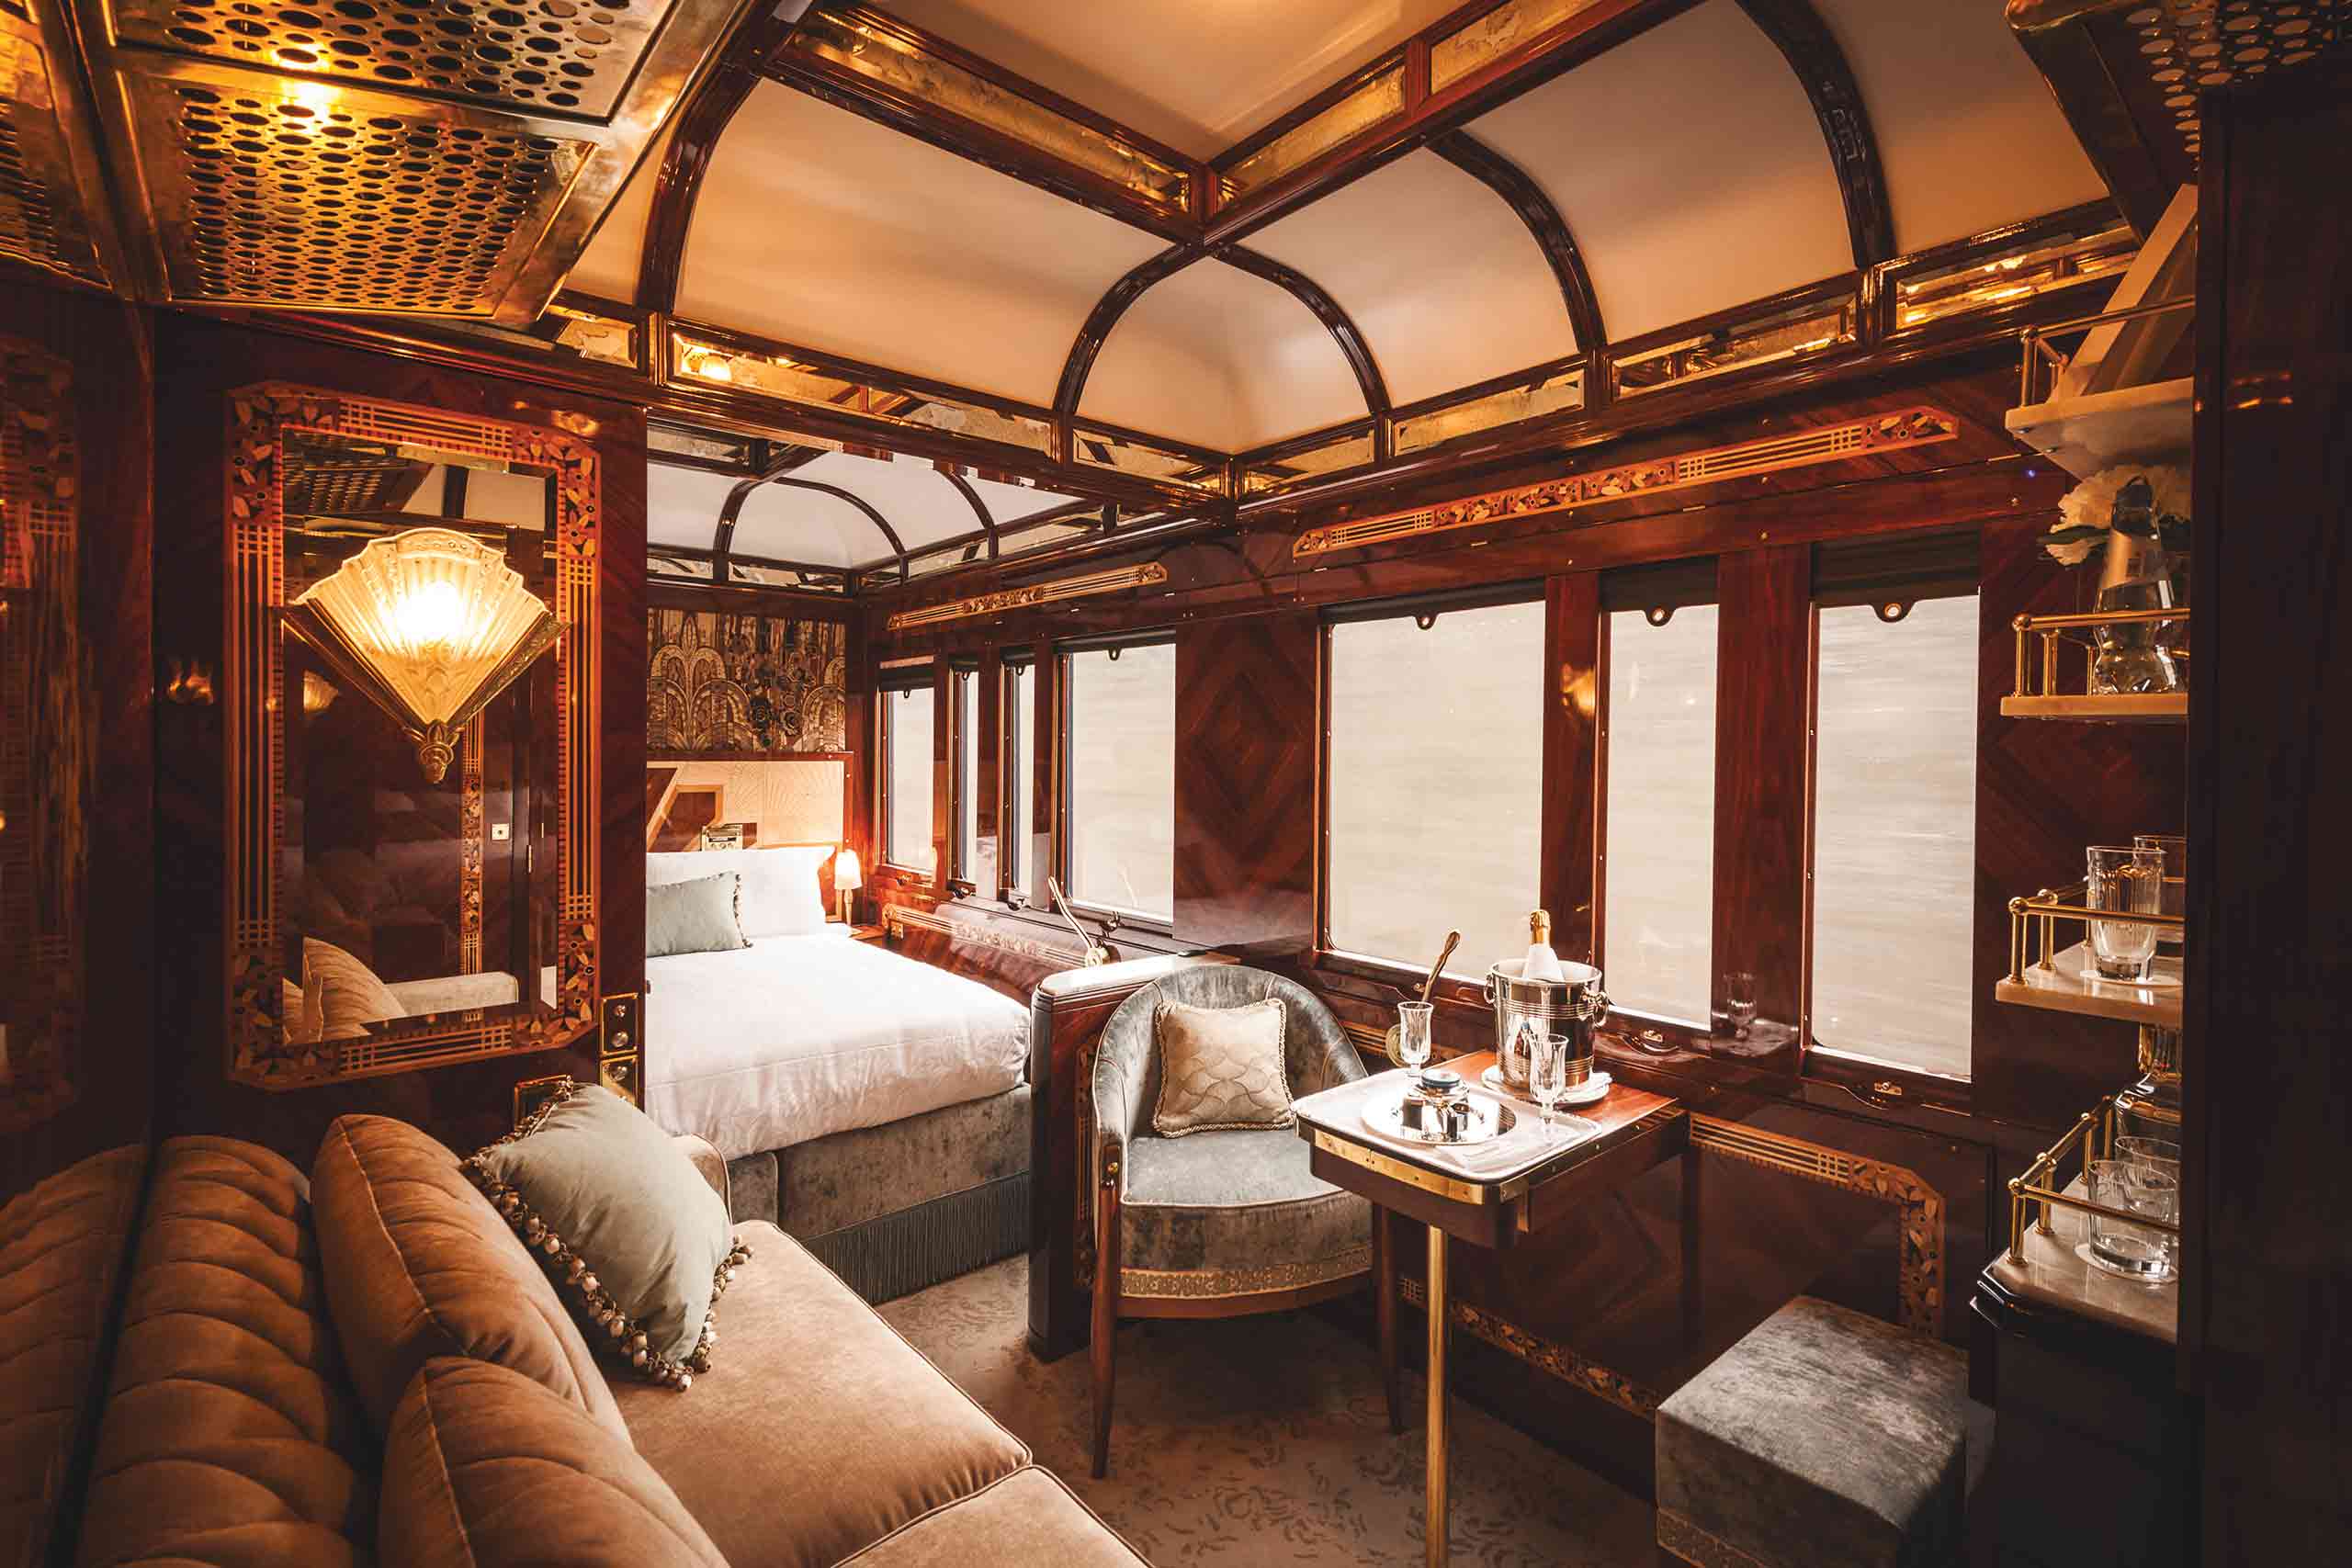 A regal bedroom aboard the Venice Simplon-Orient-Express.